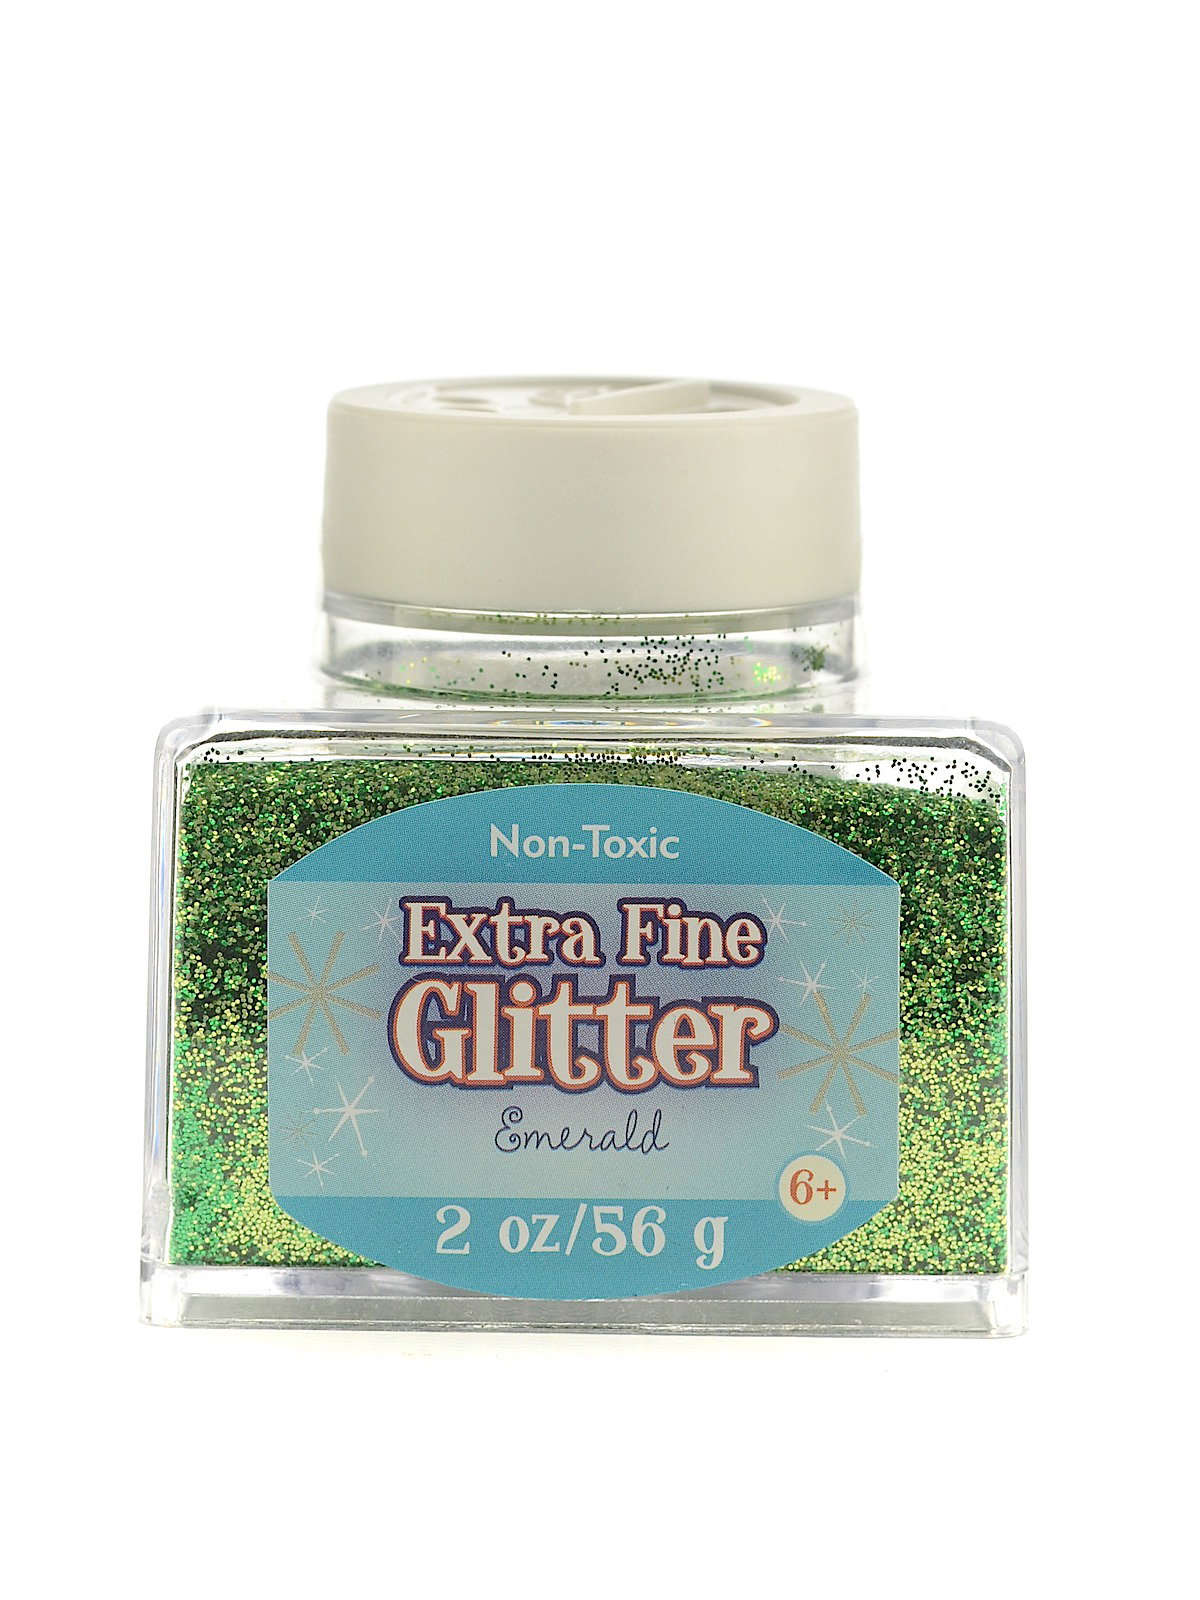 Extra fine glitter 2 oz/56 g Ruby color non-toxic. Shaker bottle